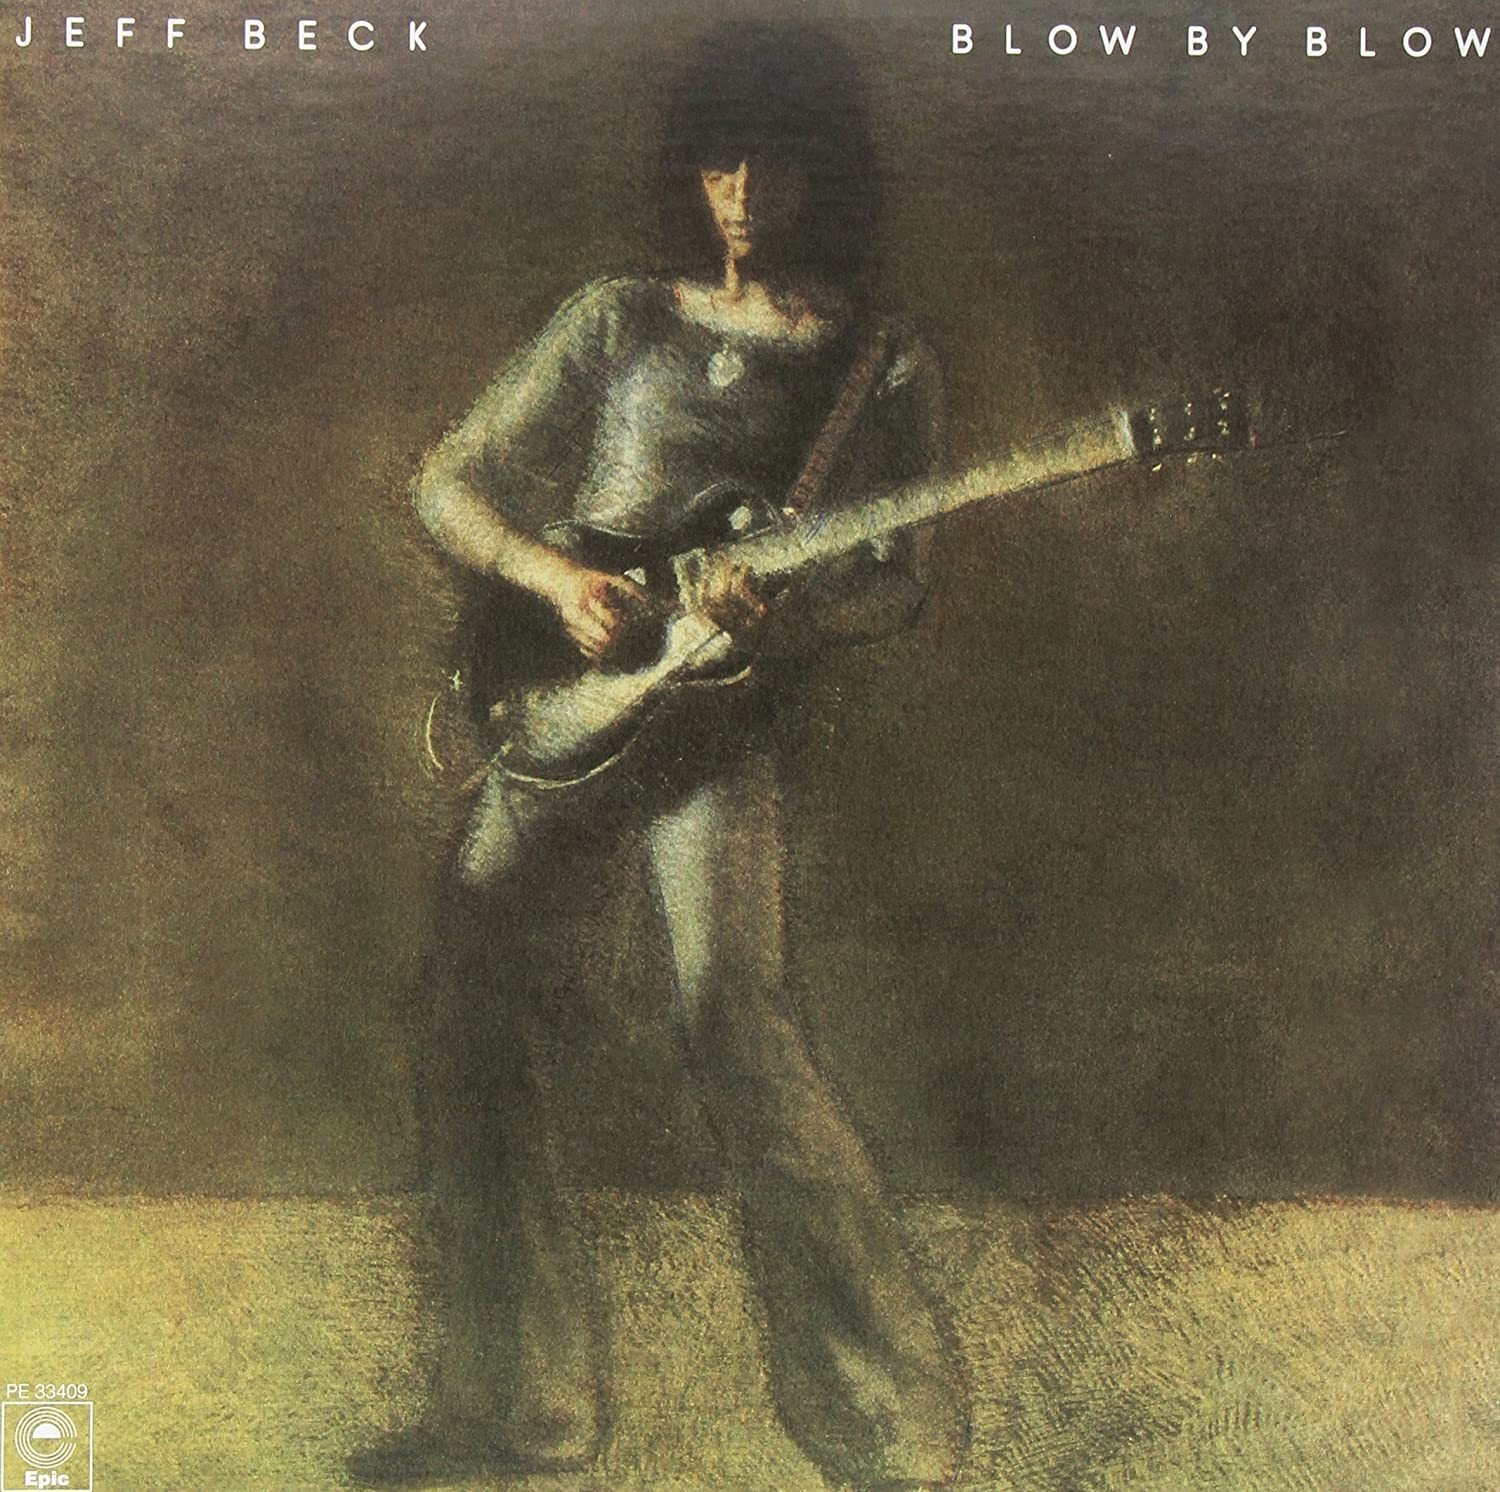 Vinyl Record Jeff Beck - Blow By Blow (2 LP)